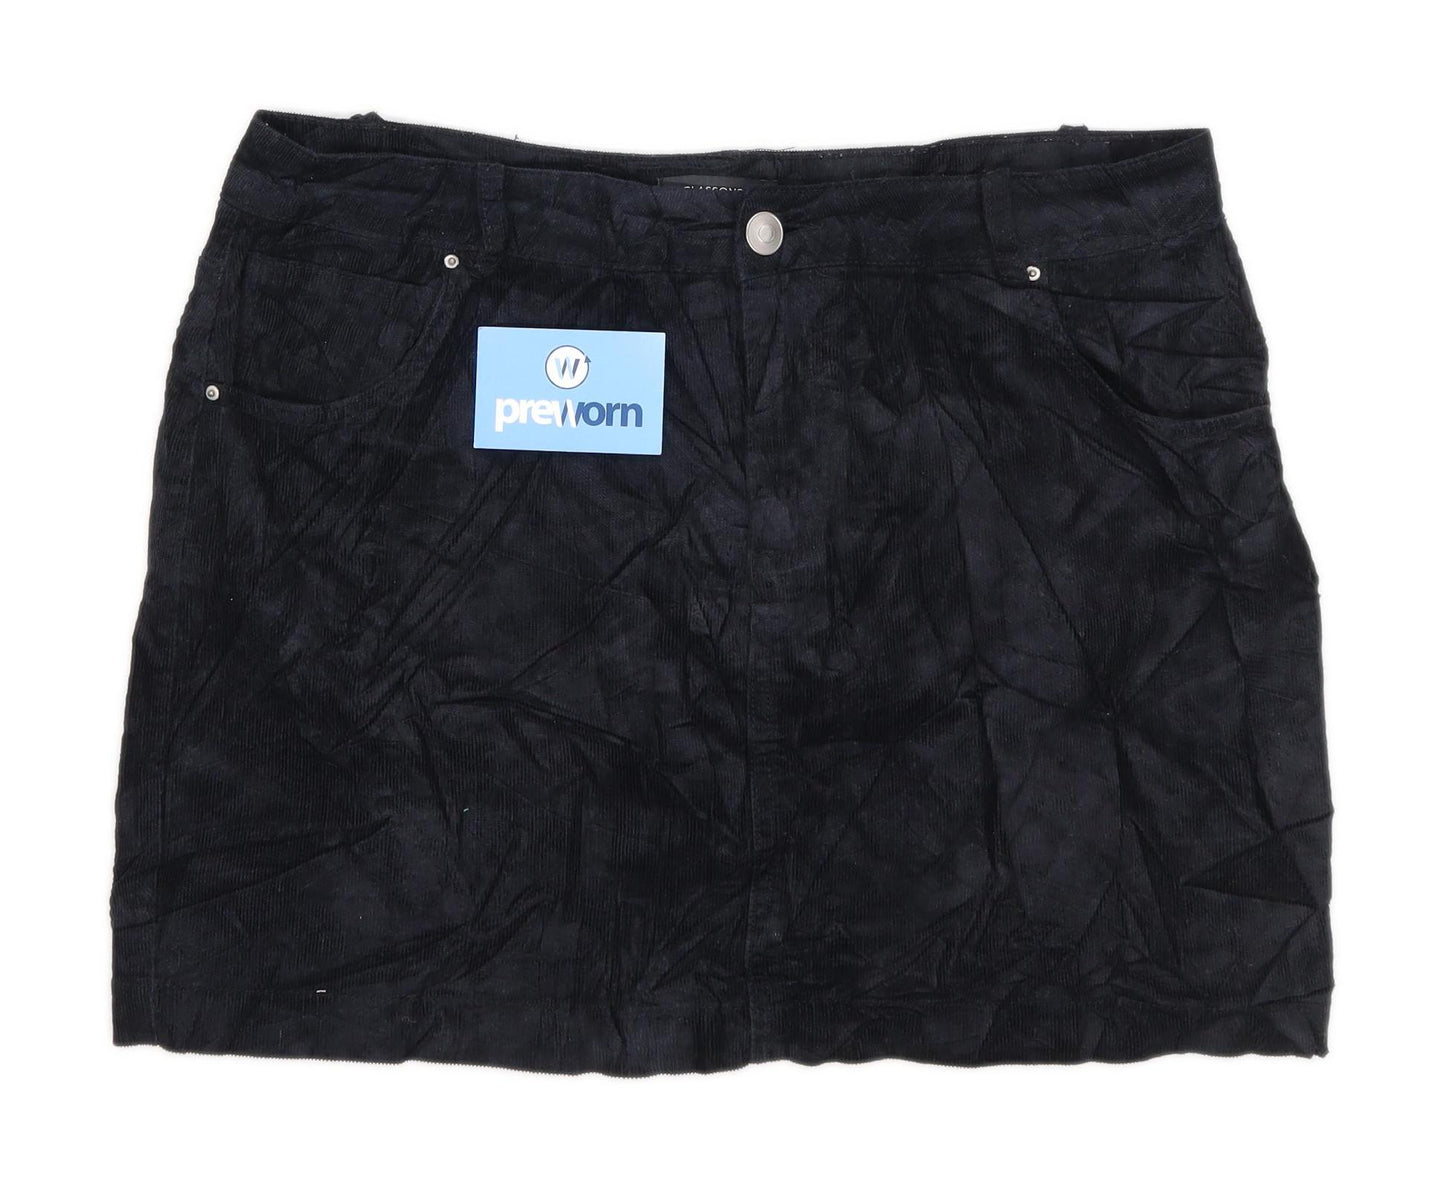 Glassons Womens Size 14 Corduroy Textured Black Skirt (Regular)